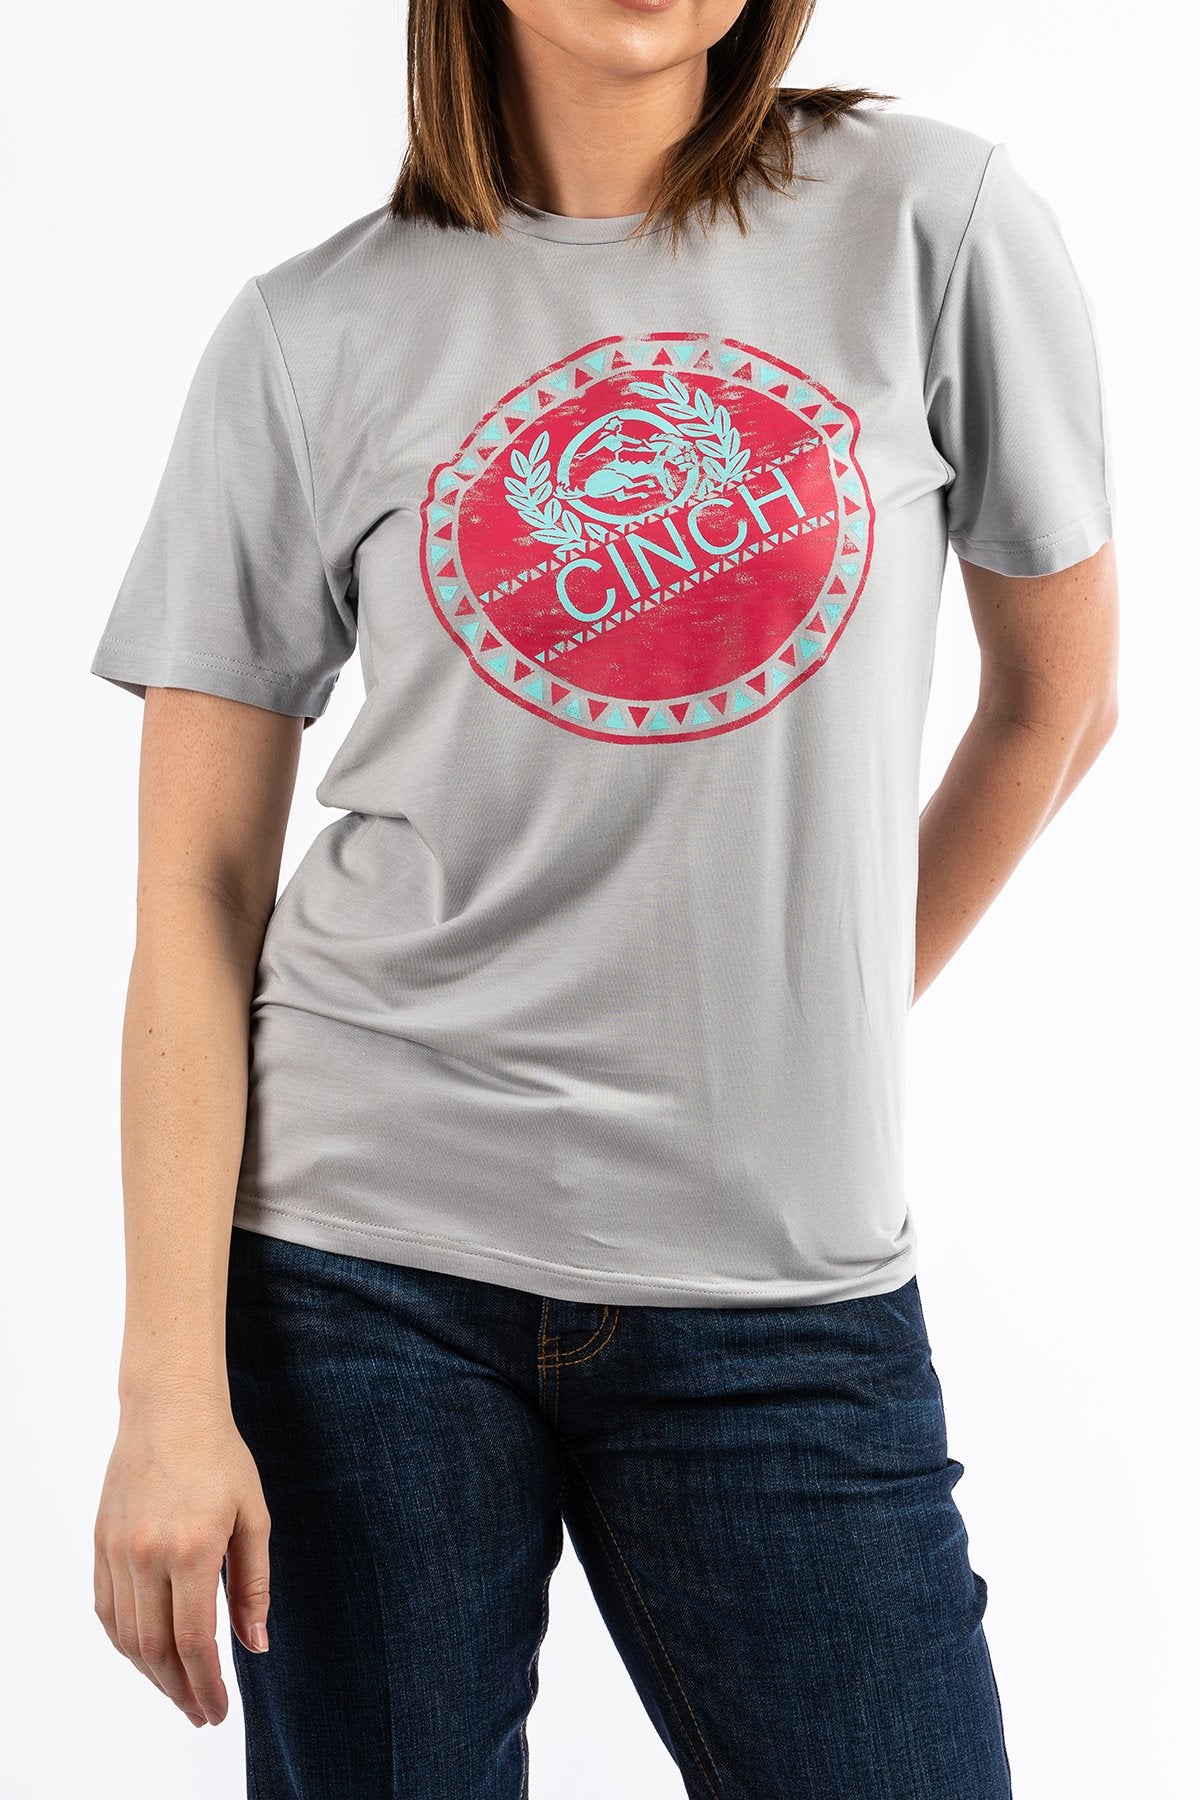 Ladies Cinch Danvers T-Shirt